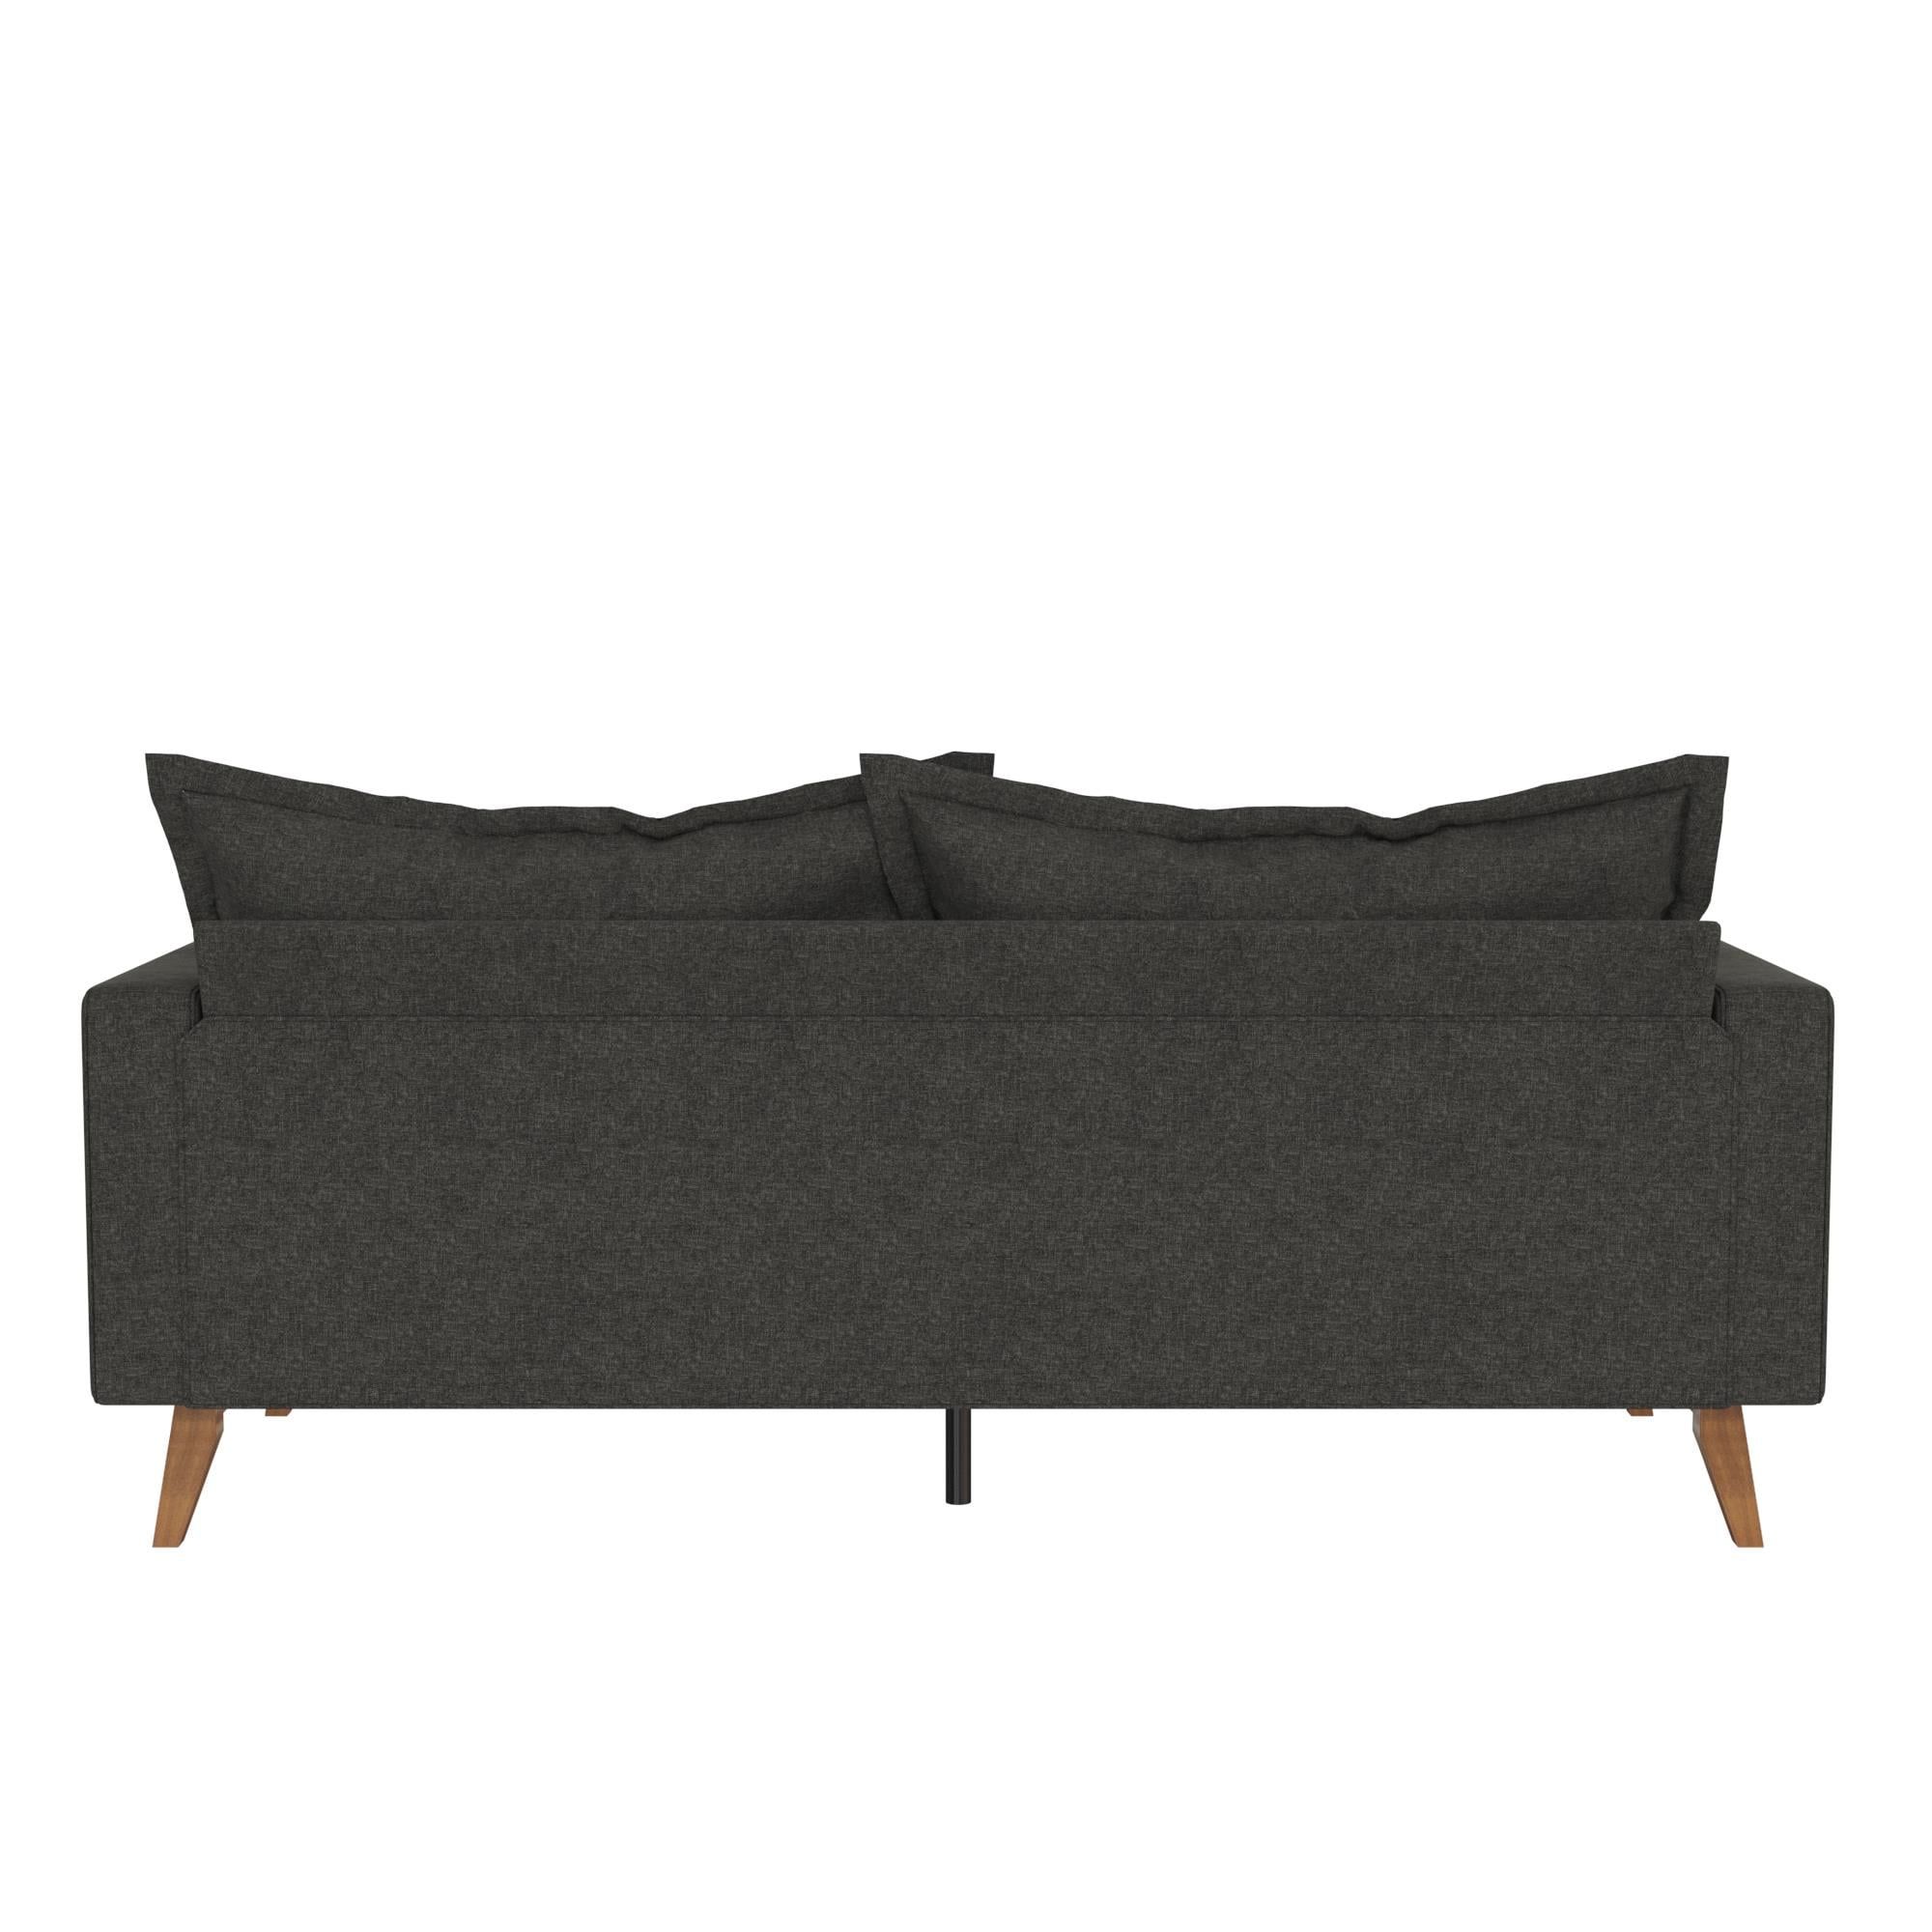 Dhp Miriam Pillowback Wood Base Sofa, Gray Linen – Walmart Regarding Sofas With Pillowback Wood Bases (View 4 of 15)